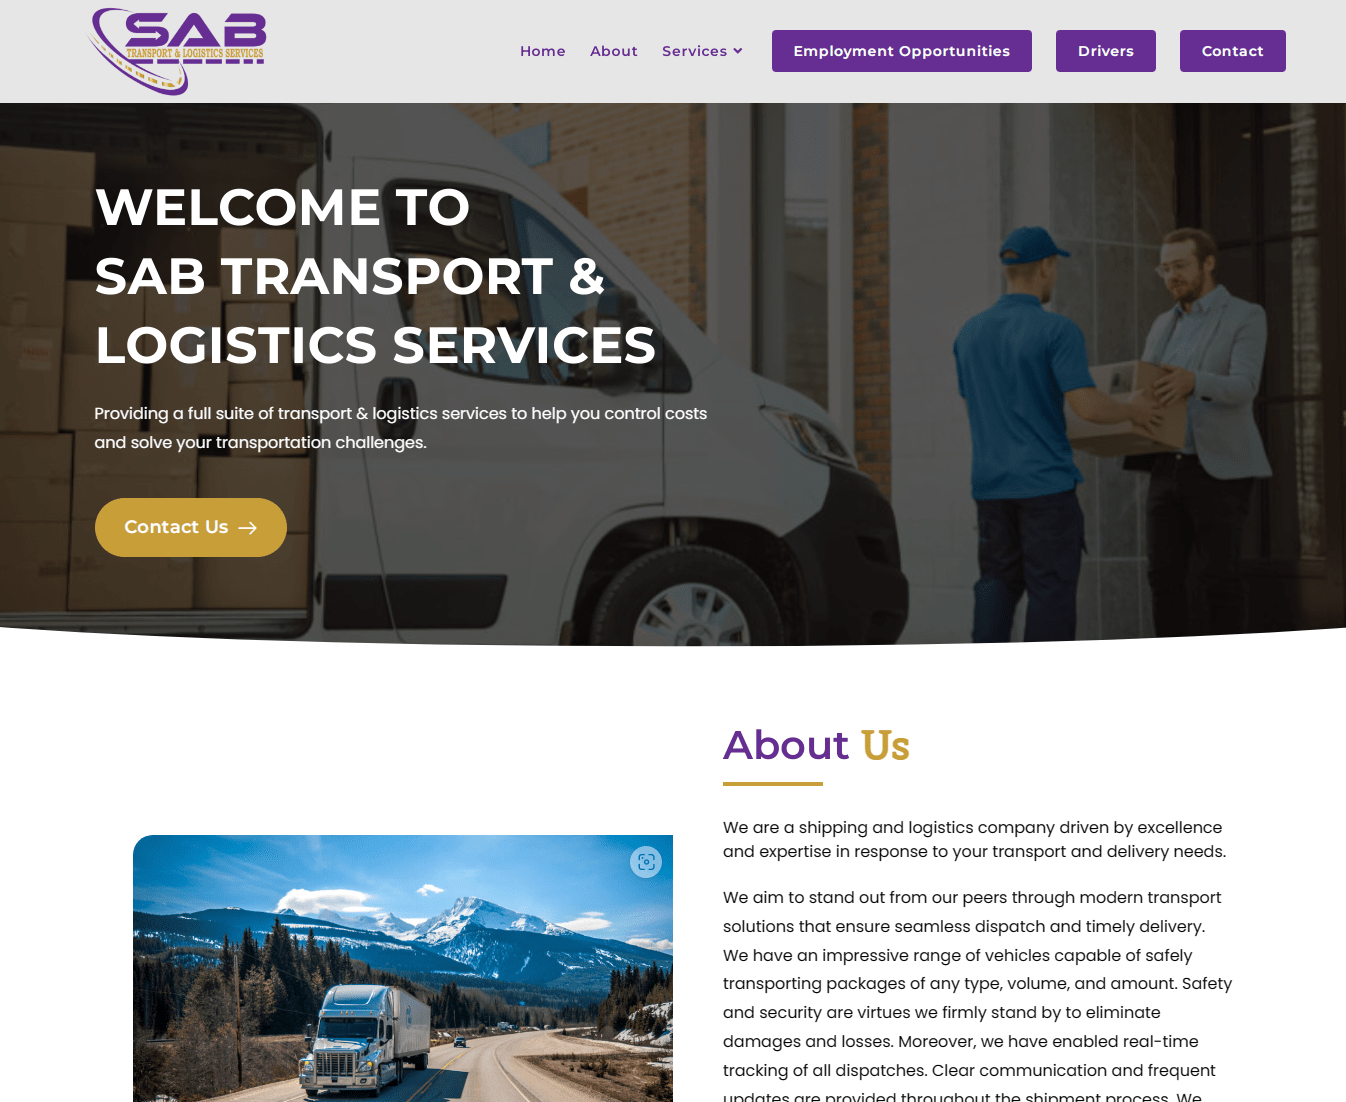 SAB TRANSPORT & LOGISTICS SERVICES